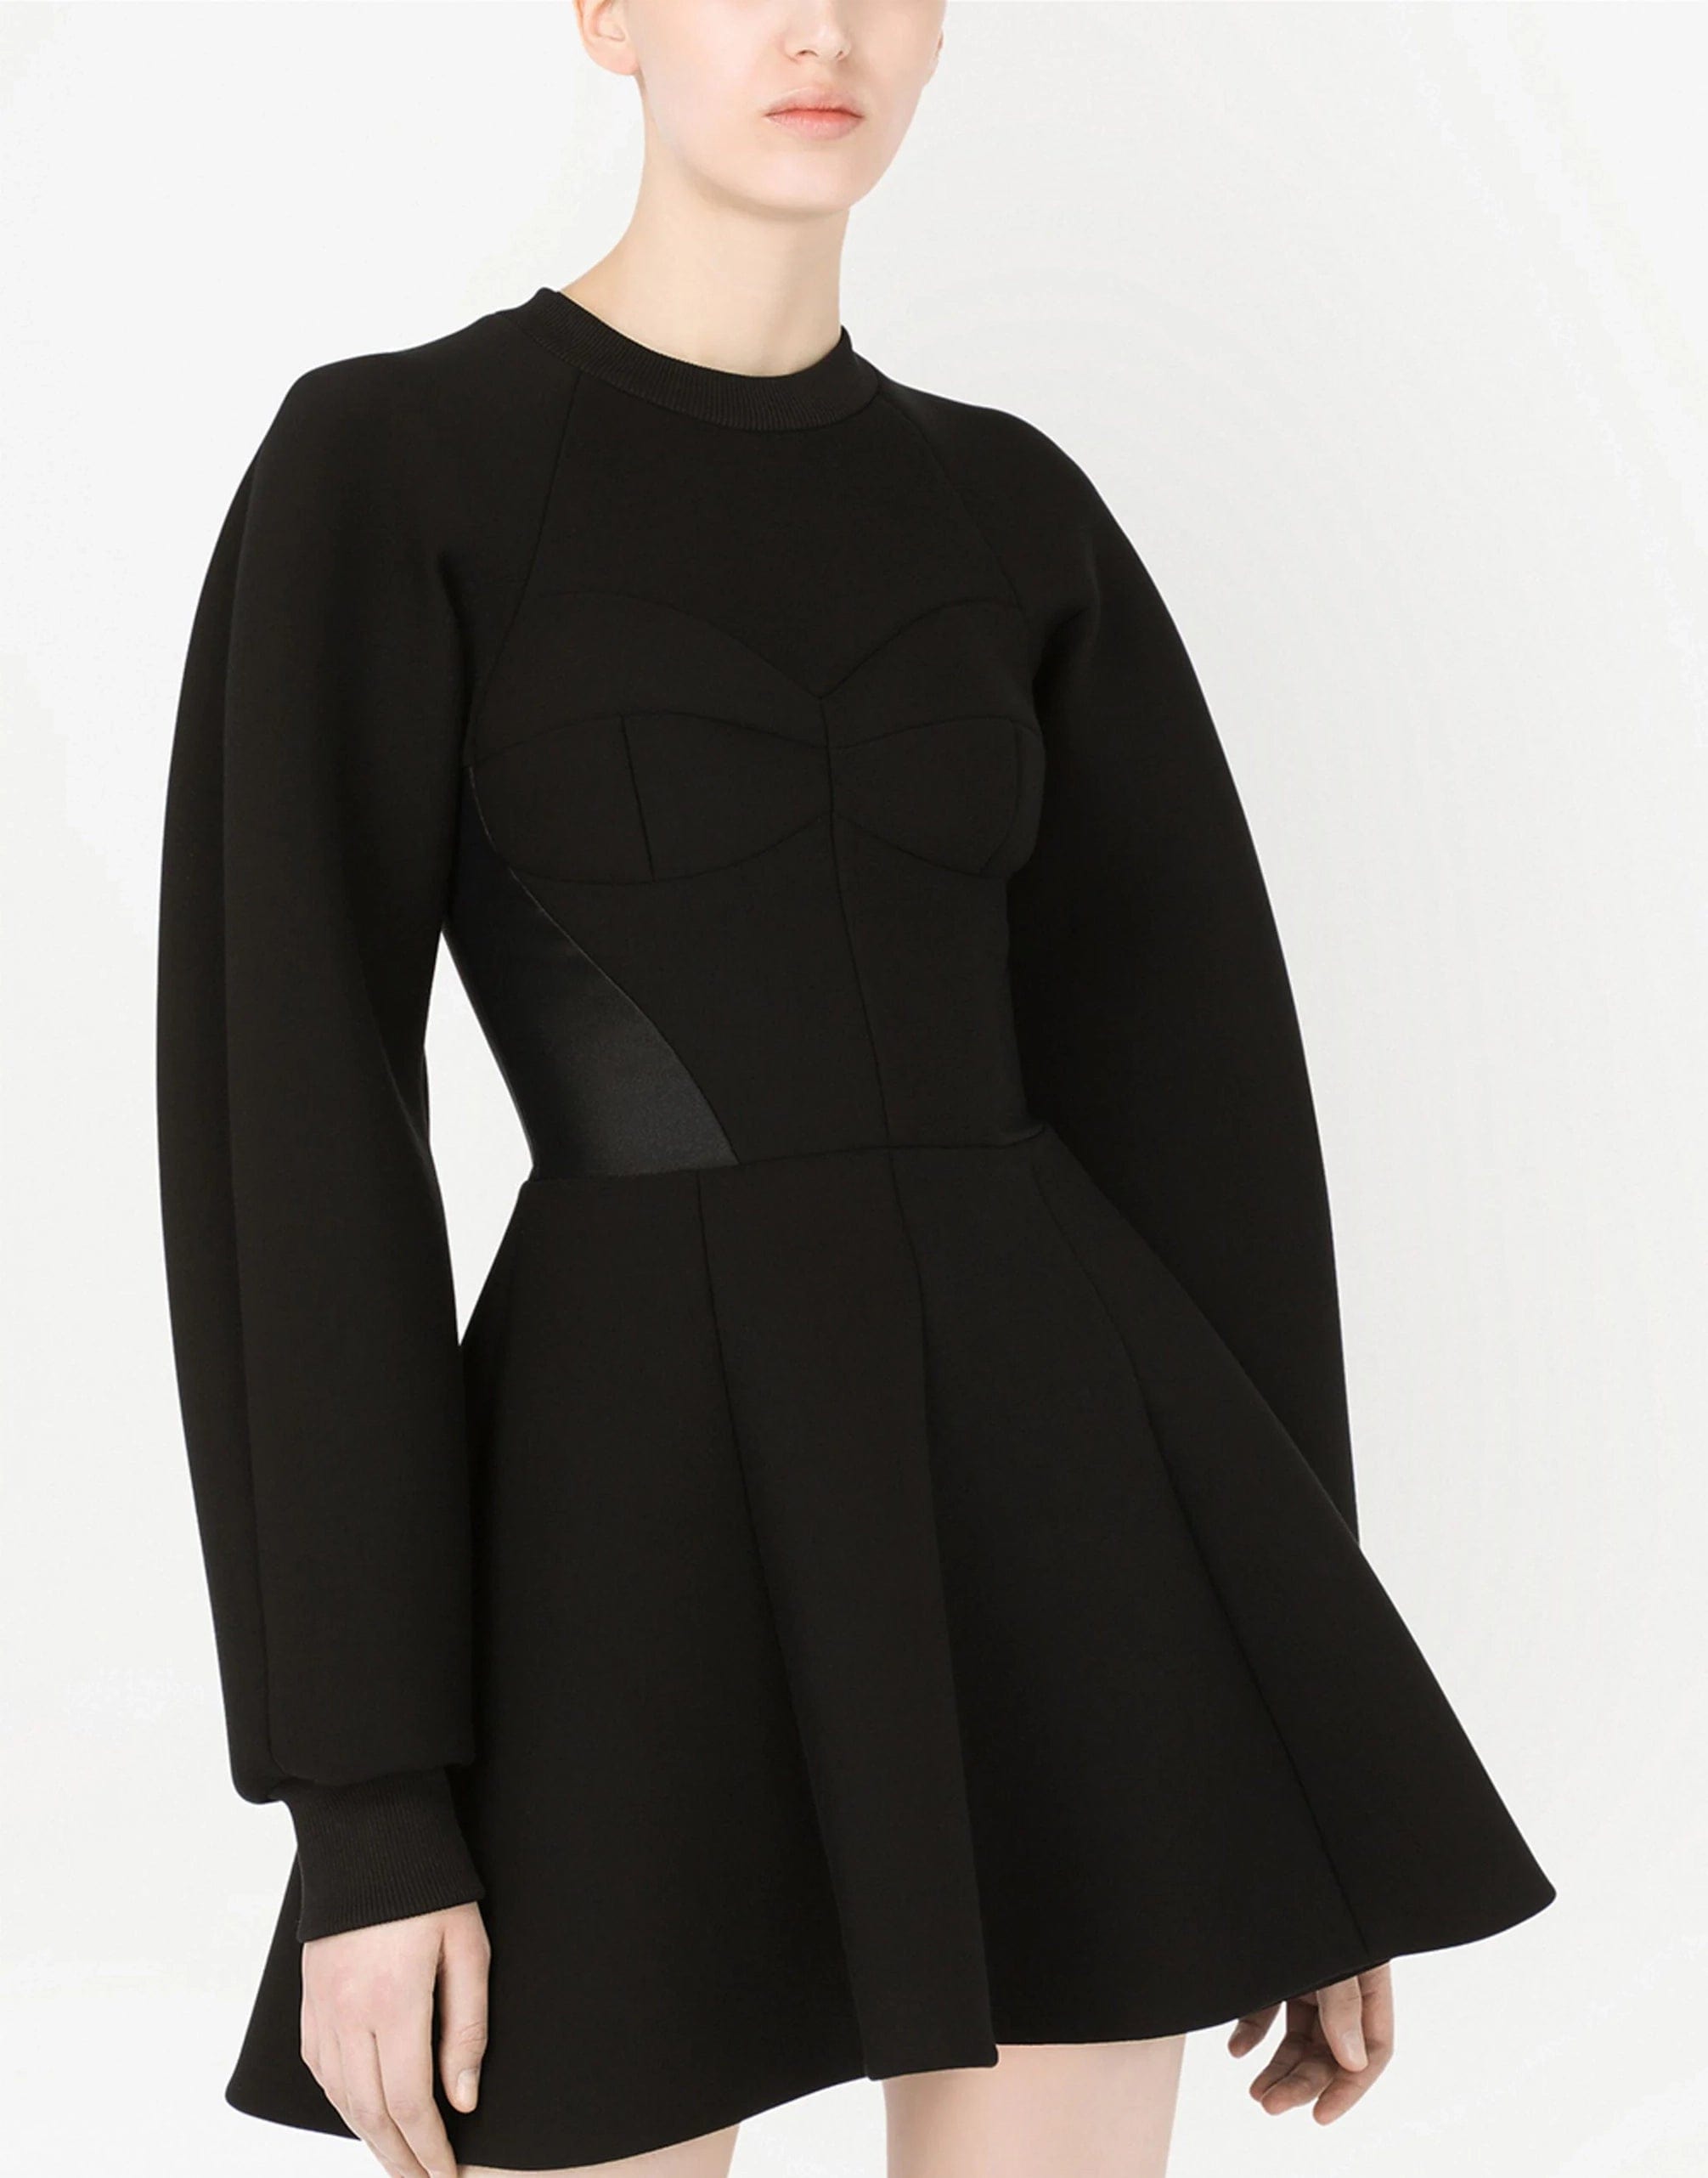 Dolce & Gabbana Technical Jersey Dress With Bustier Details